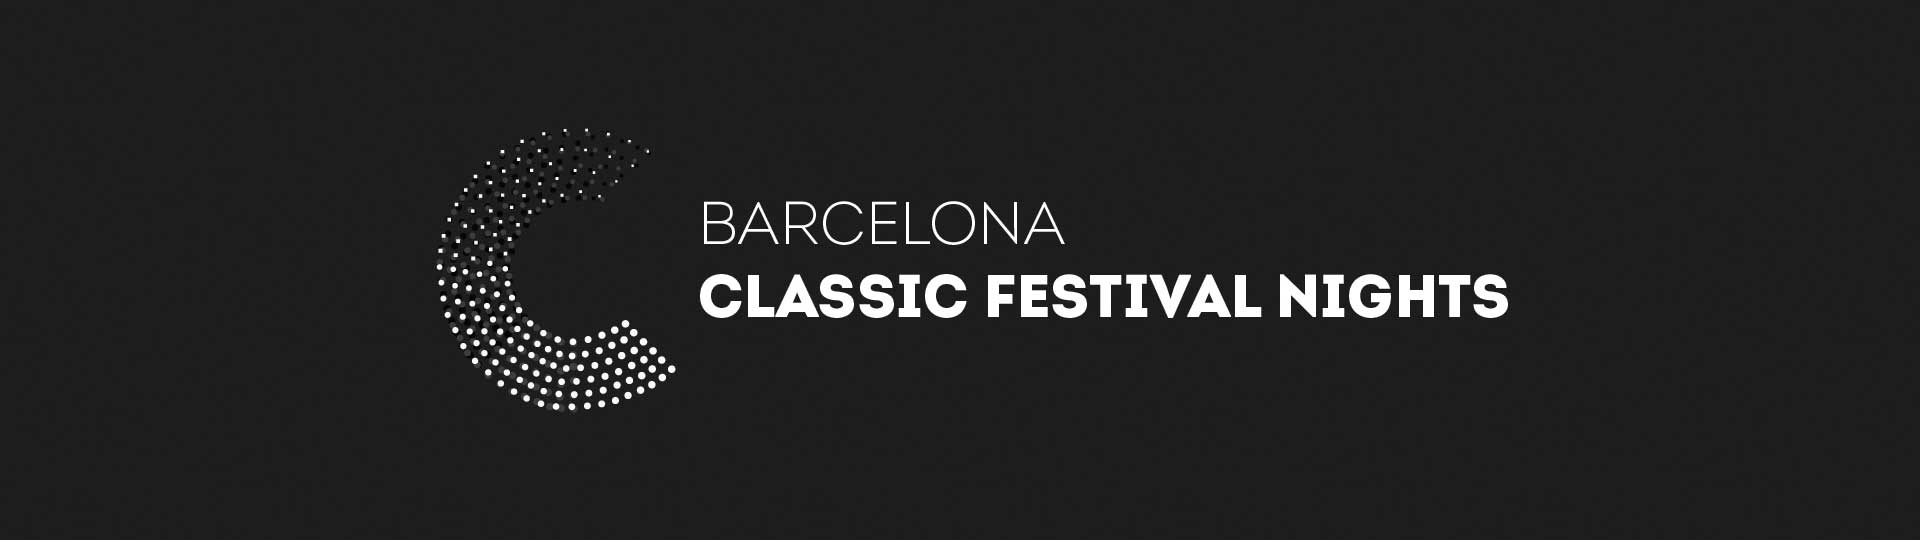 barcelona-classic-festival-nights